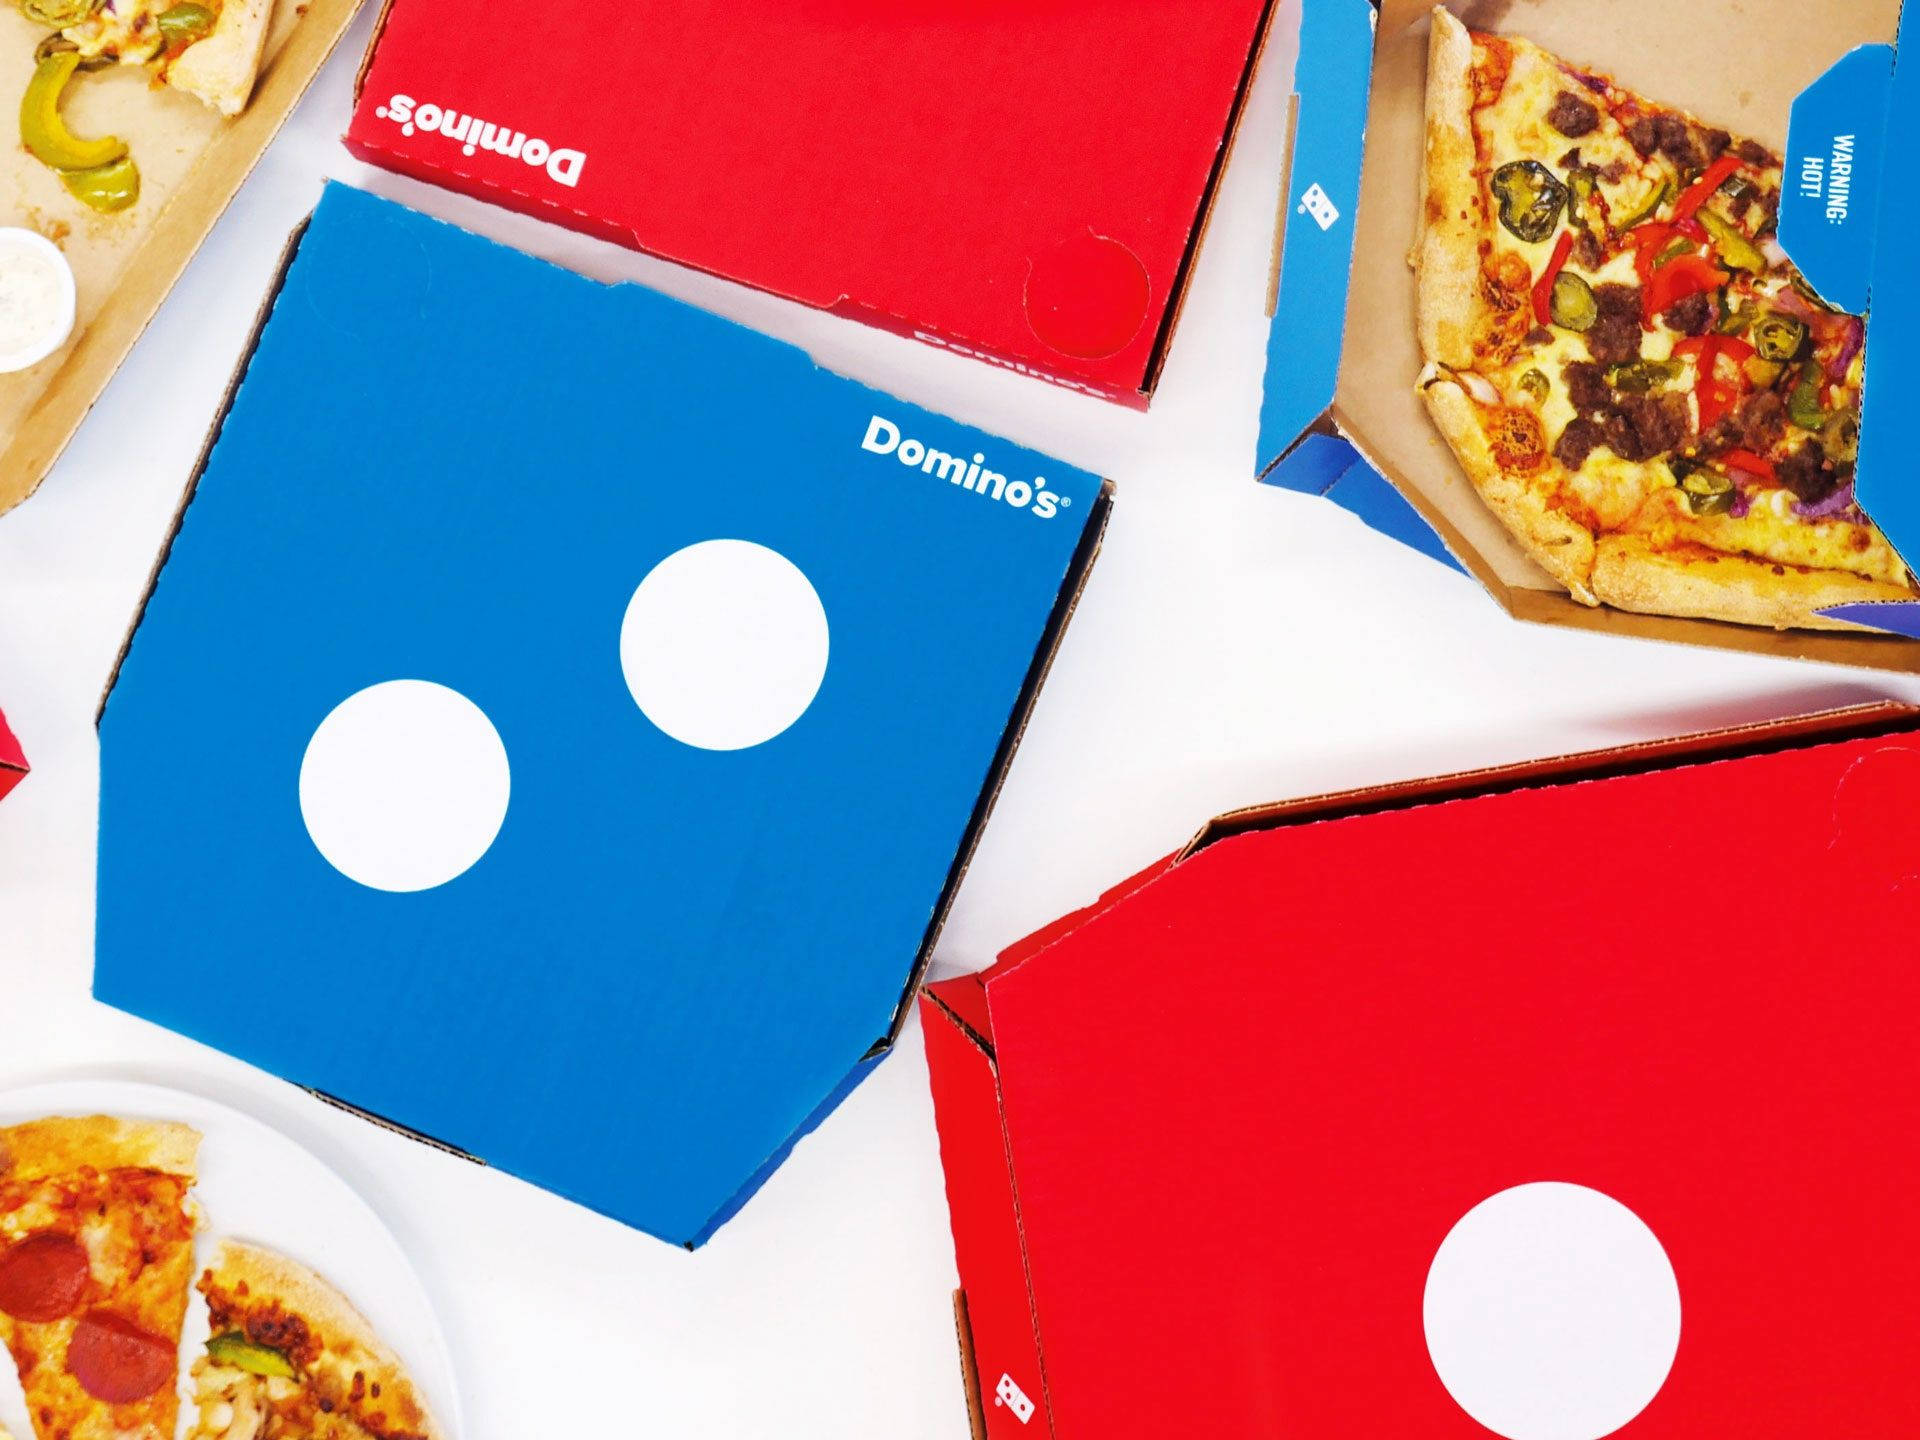 The Dominos Pizza Box Wallpaper